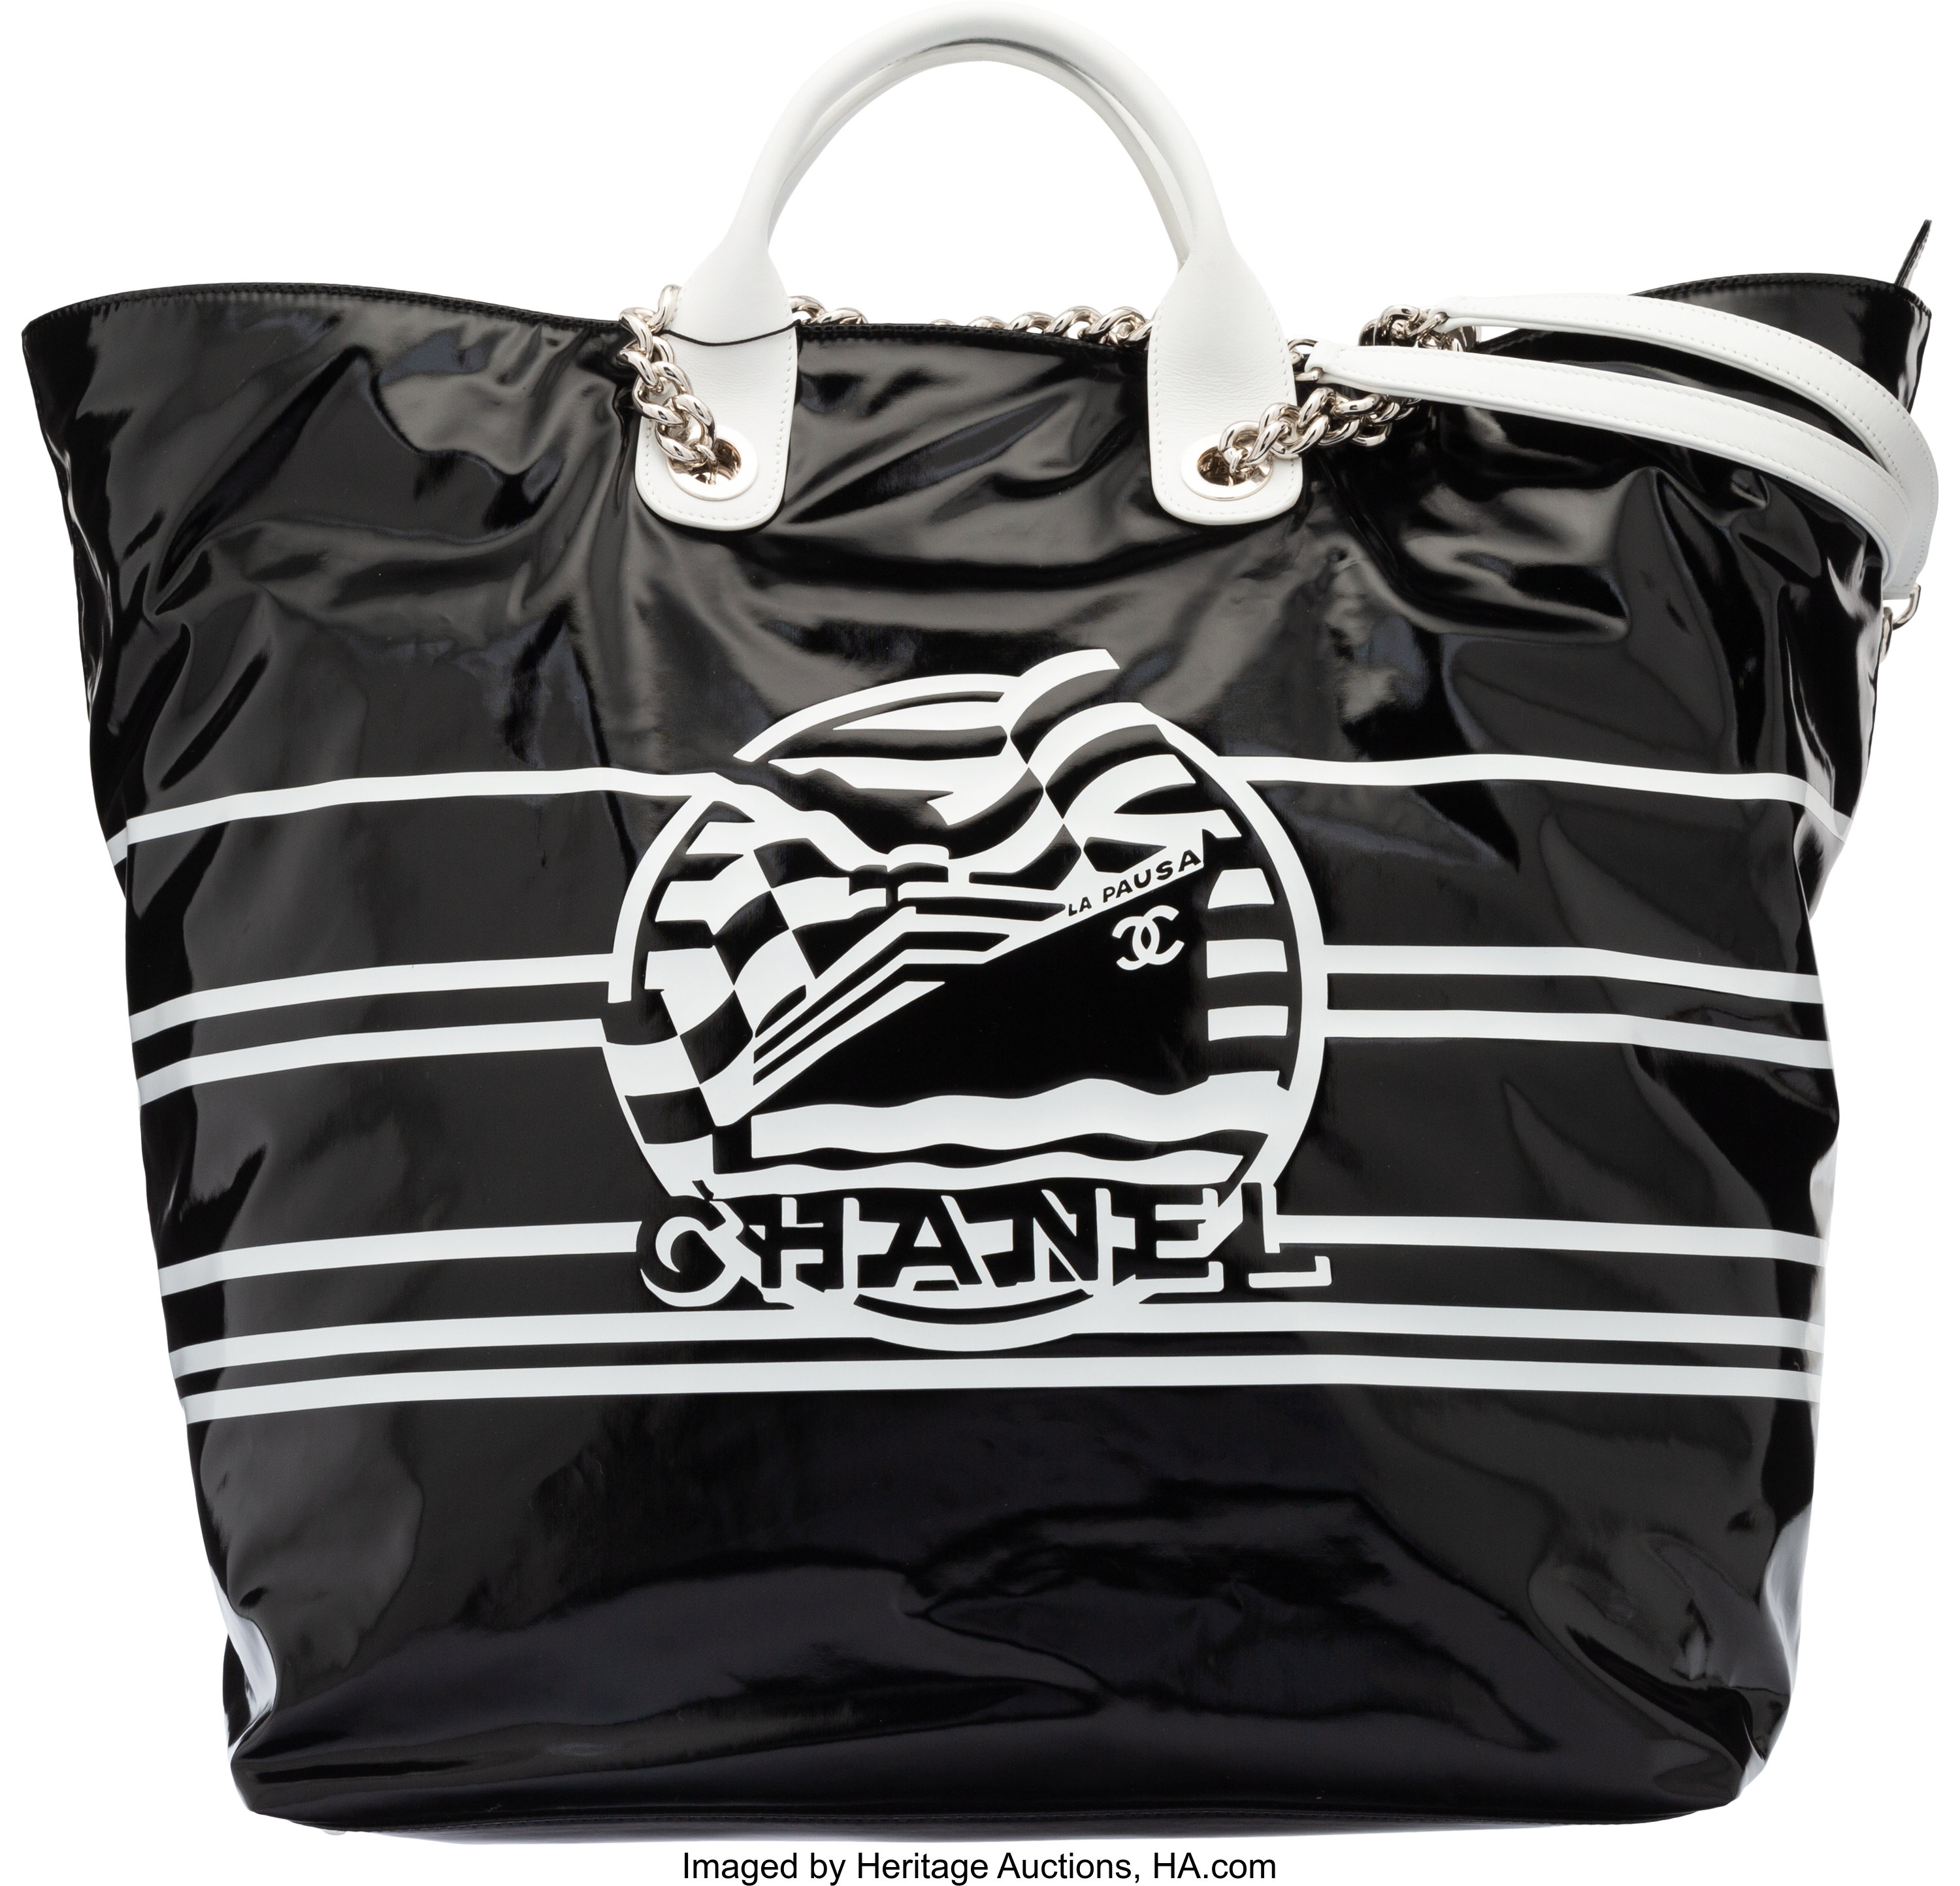 Sold at Auction: Chanel Metallic Lambskin & Clear Vinyl Handbag